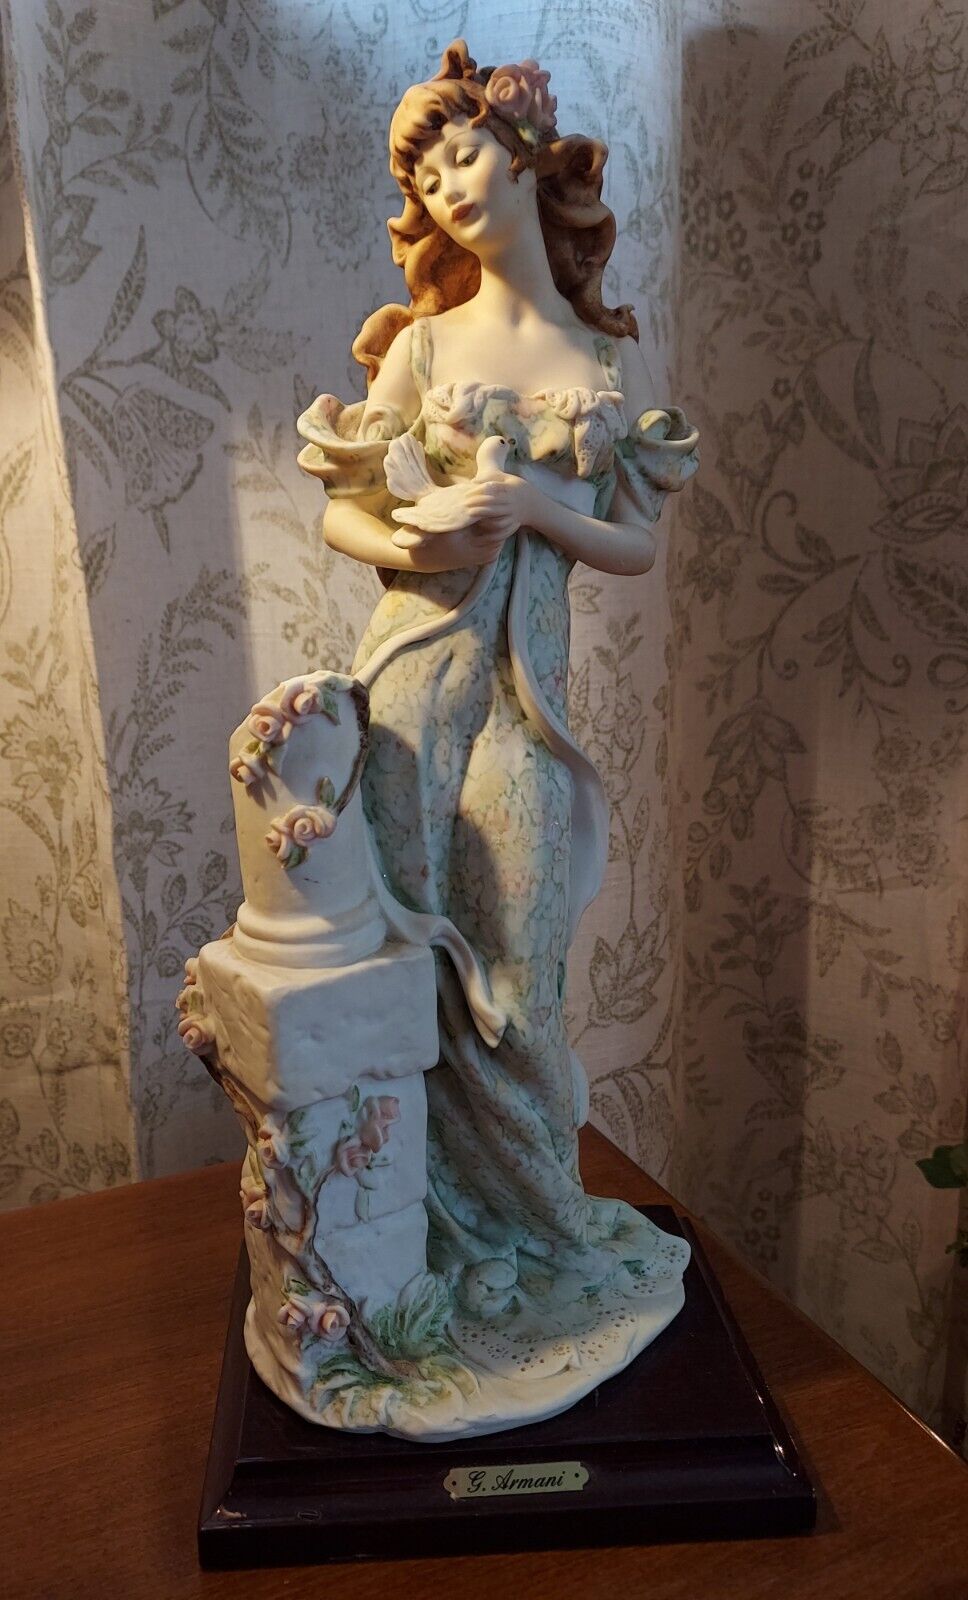 1997 Giuseppe Armani Florence Figurine Lady With Doves